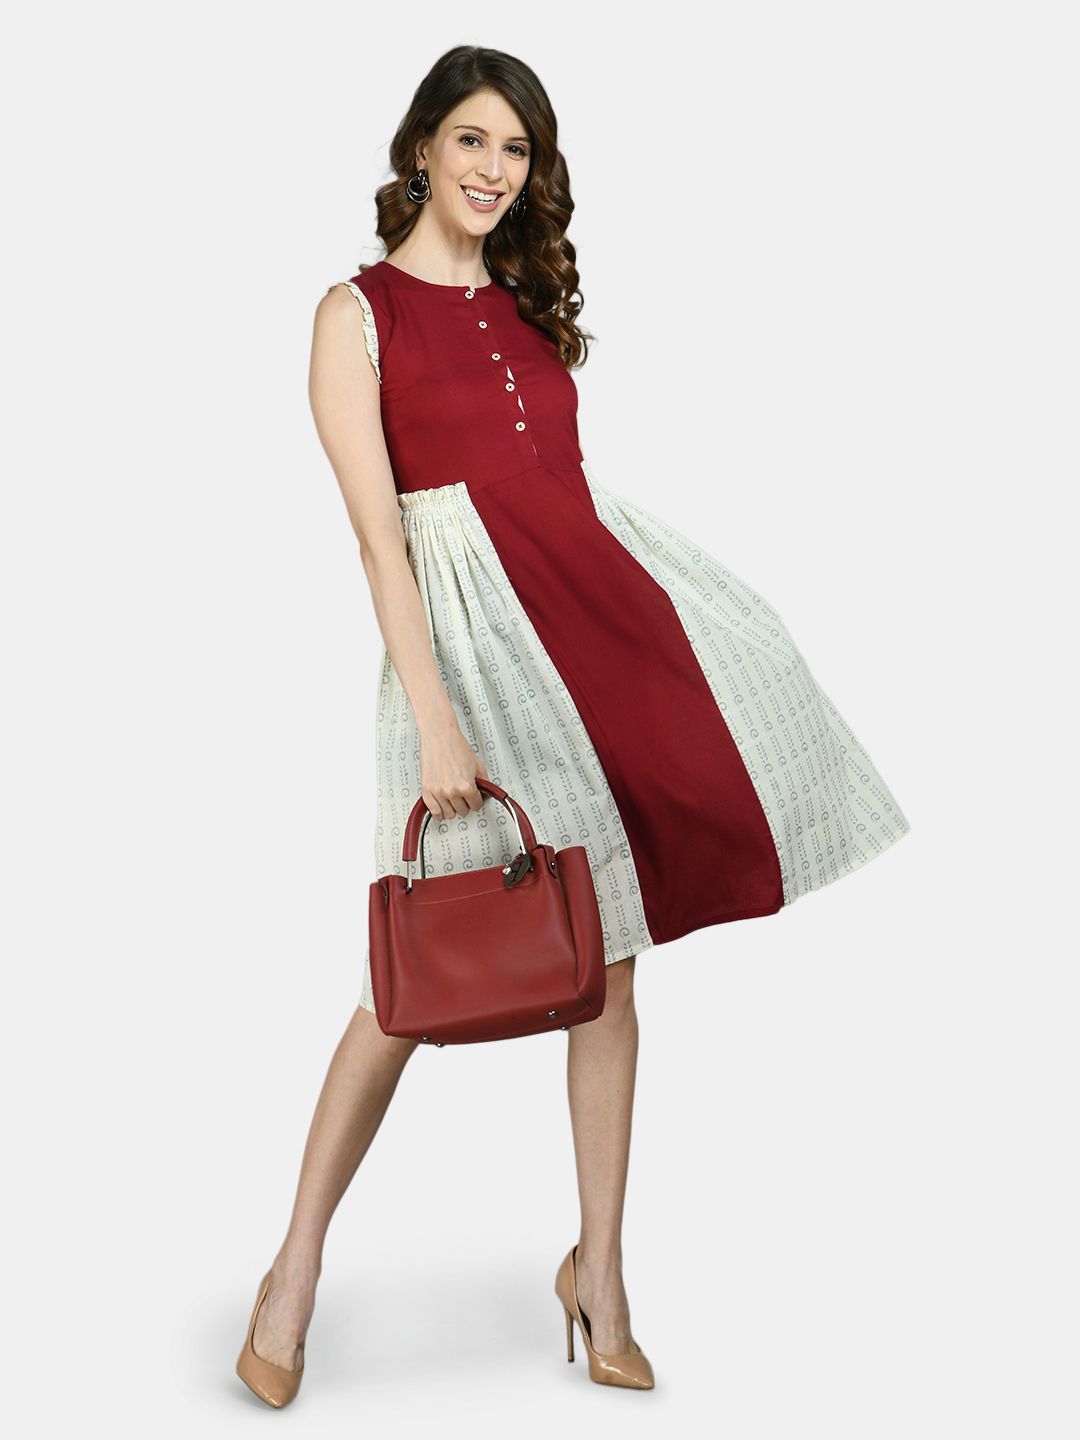 Women Red and White Printed Cotton dress by Myshka (1 Pc Set)